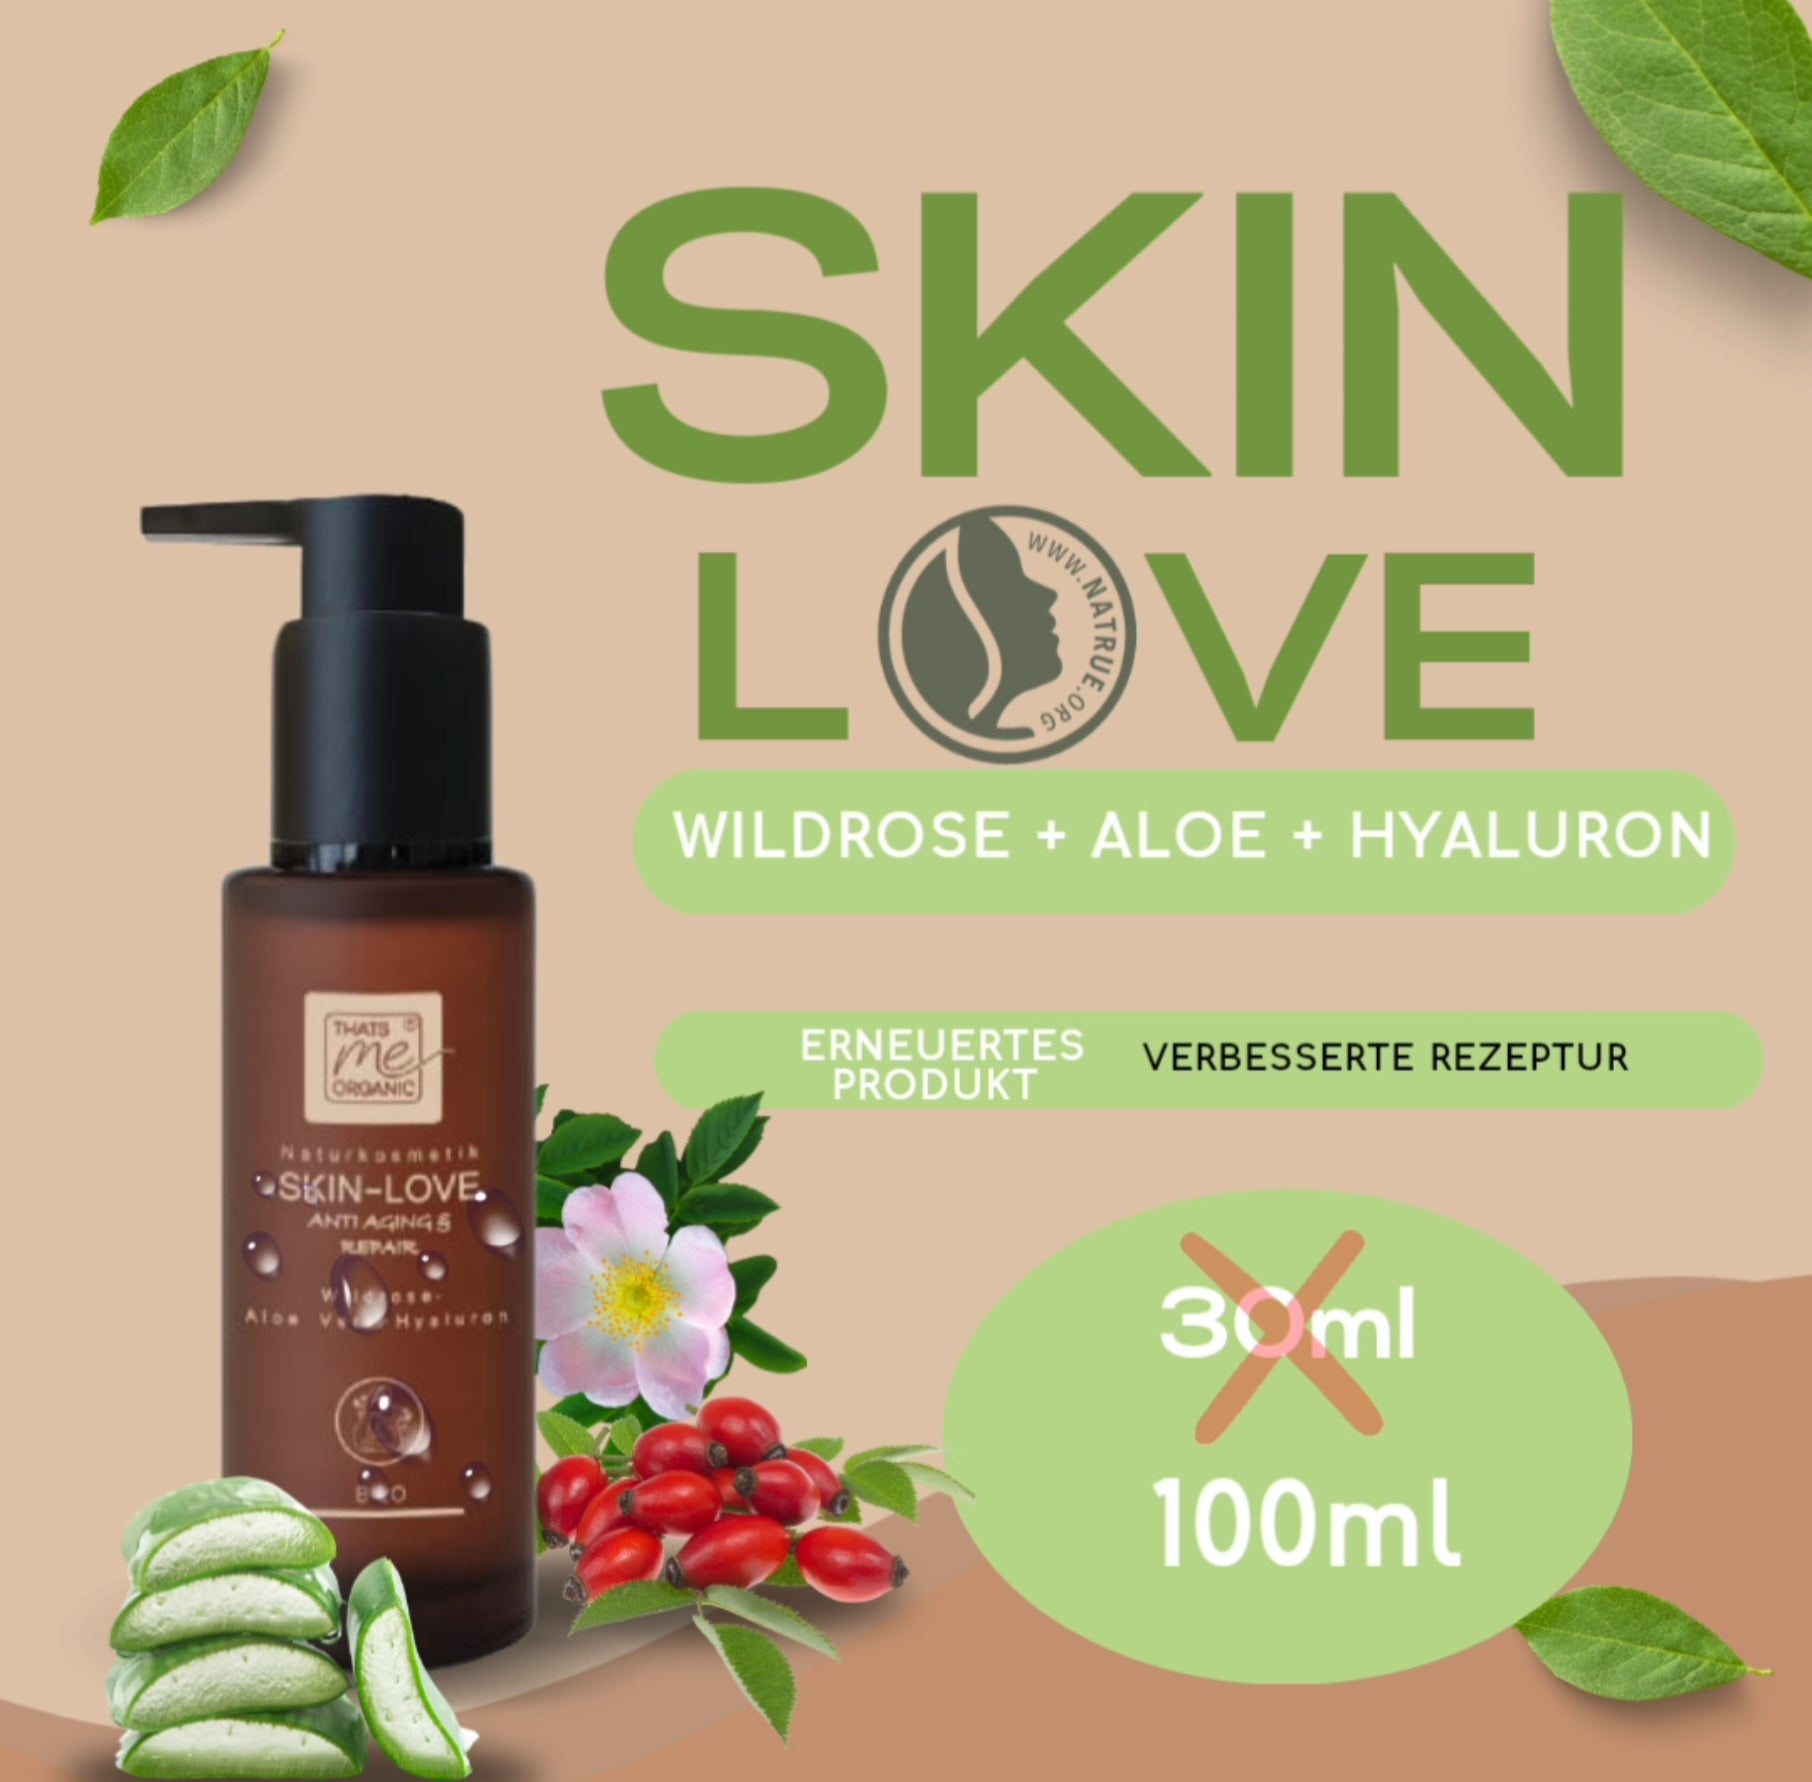 NEU: SKIN-LOVE - Wildrosen Serum mit Aloe Vera-Hyaluron Bio-Naturkosmetik 100ml